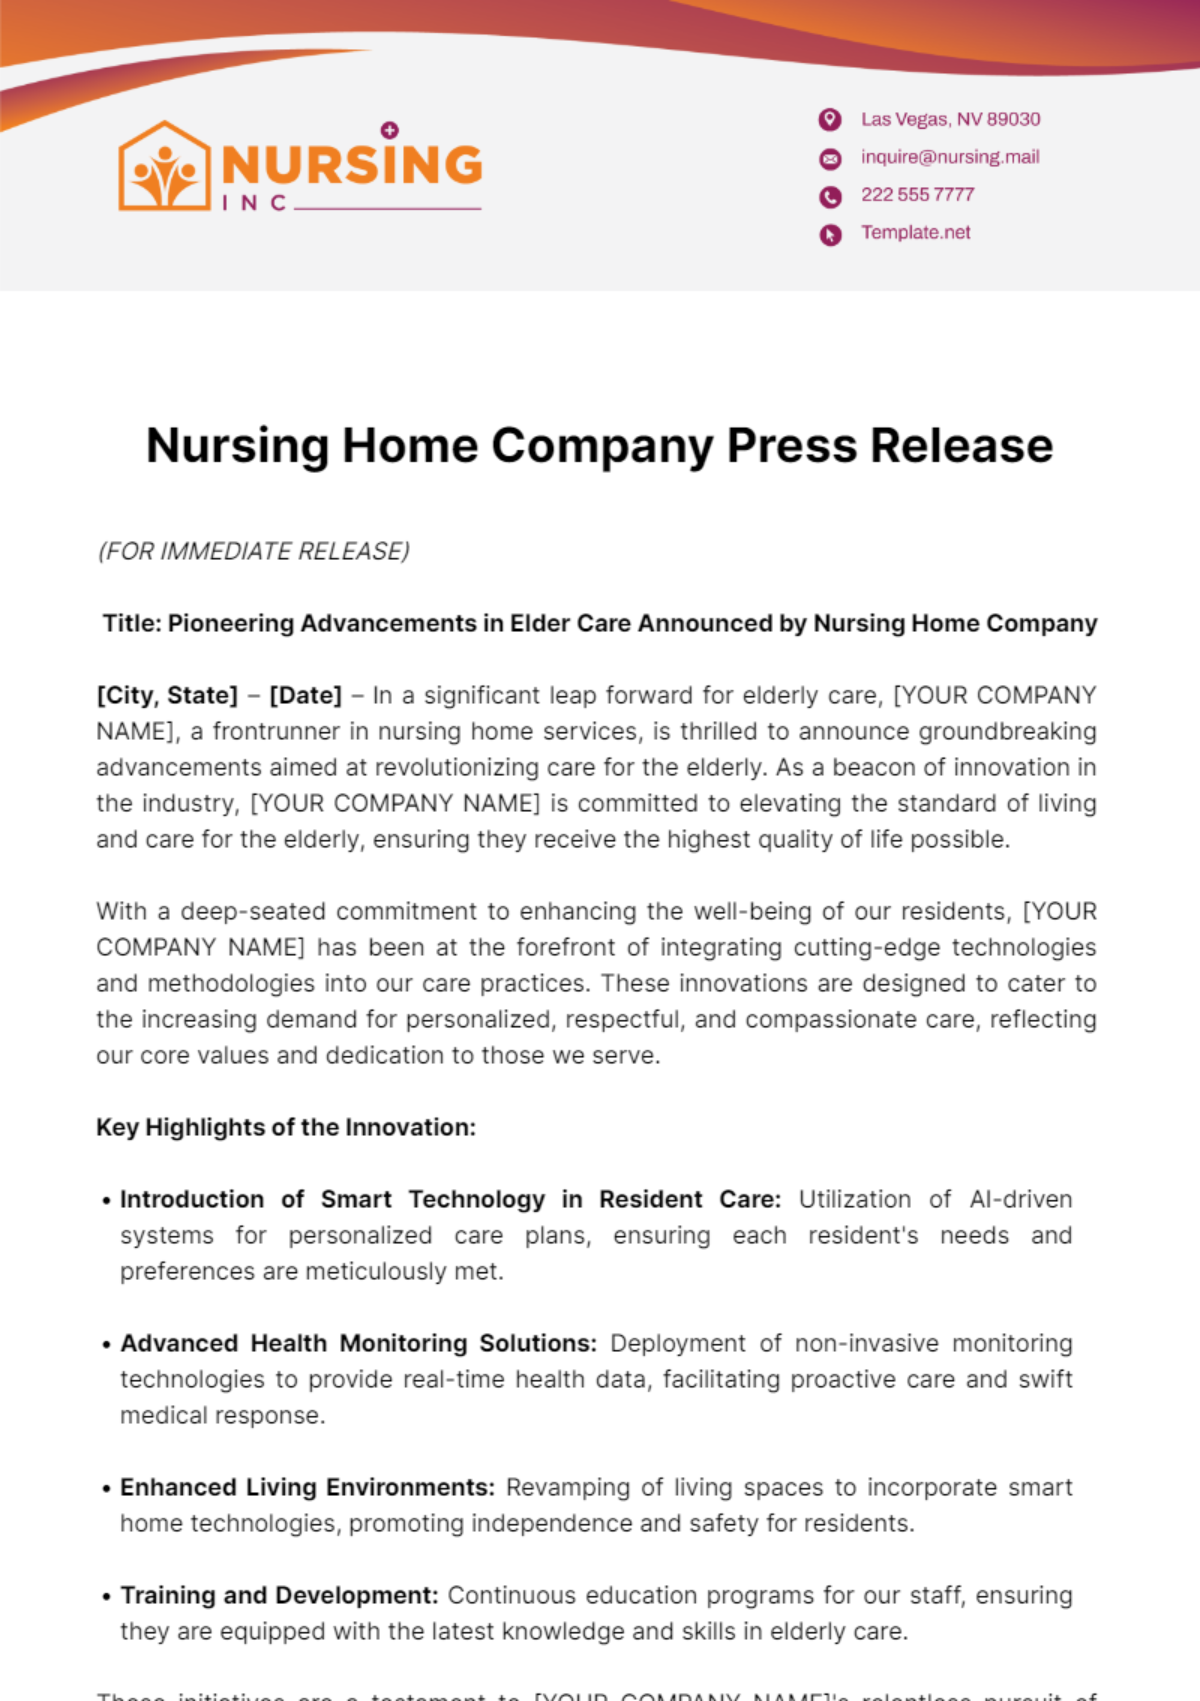 Nursing Home Company Press Release Template